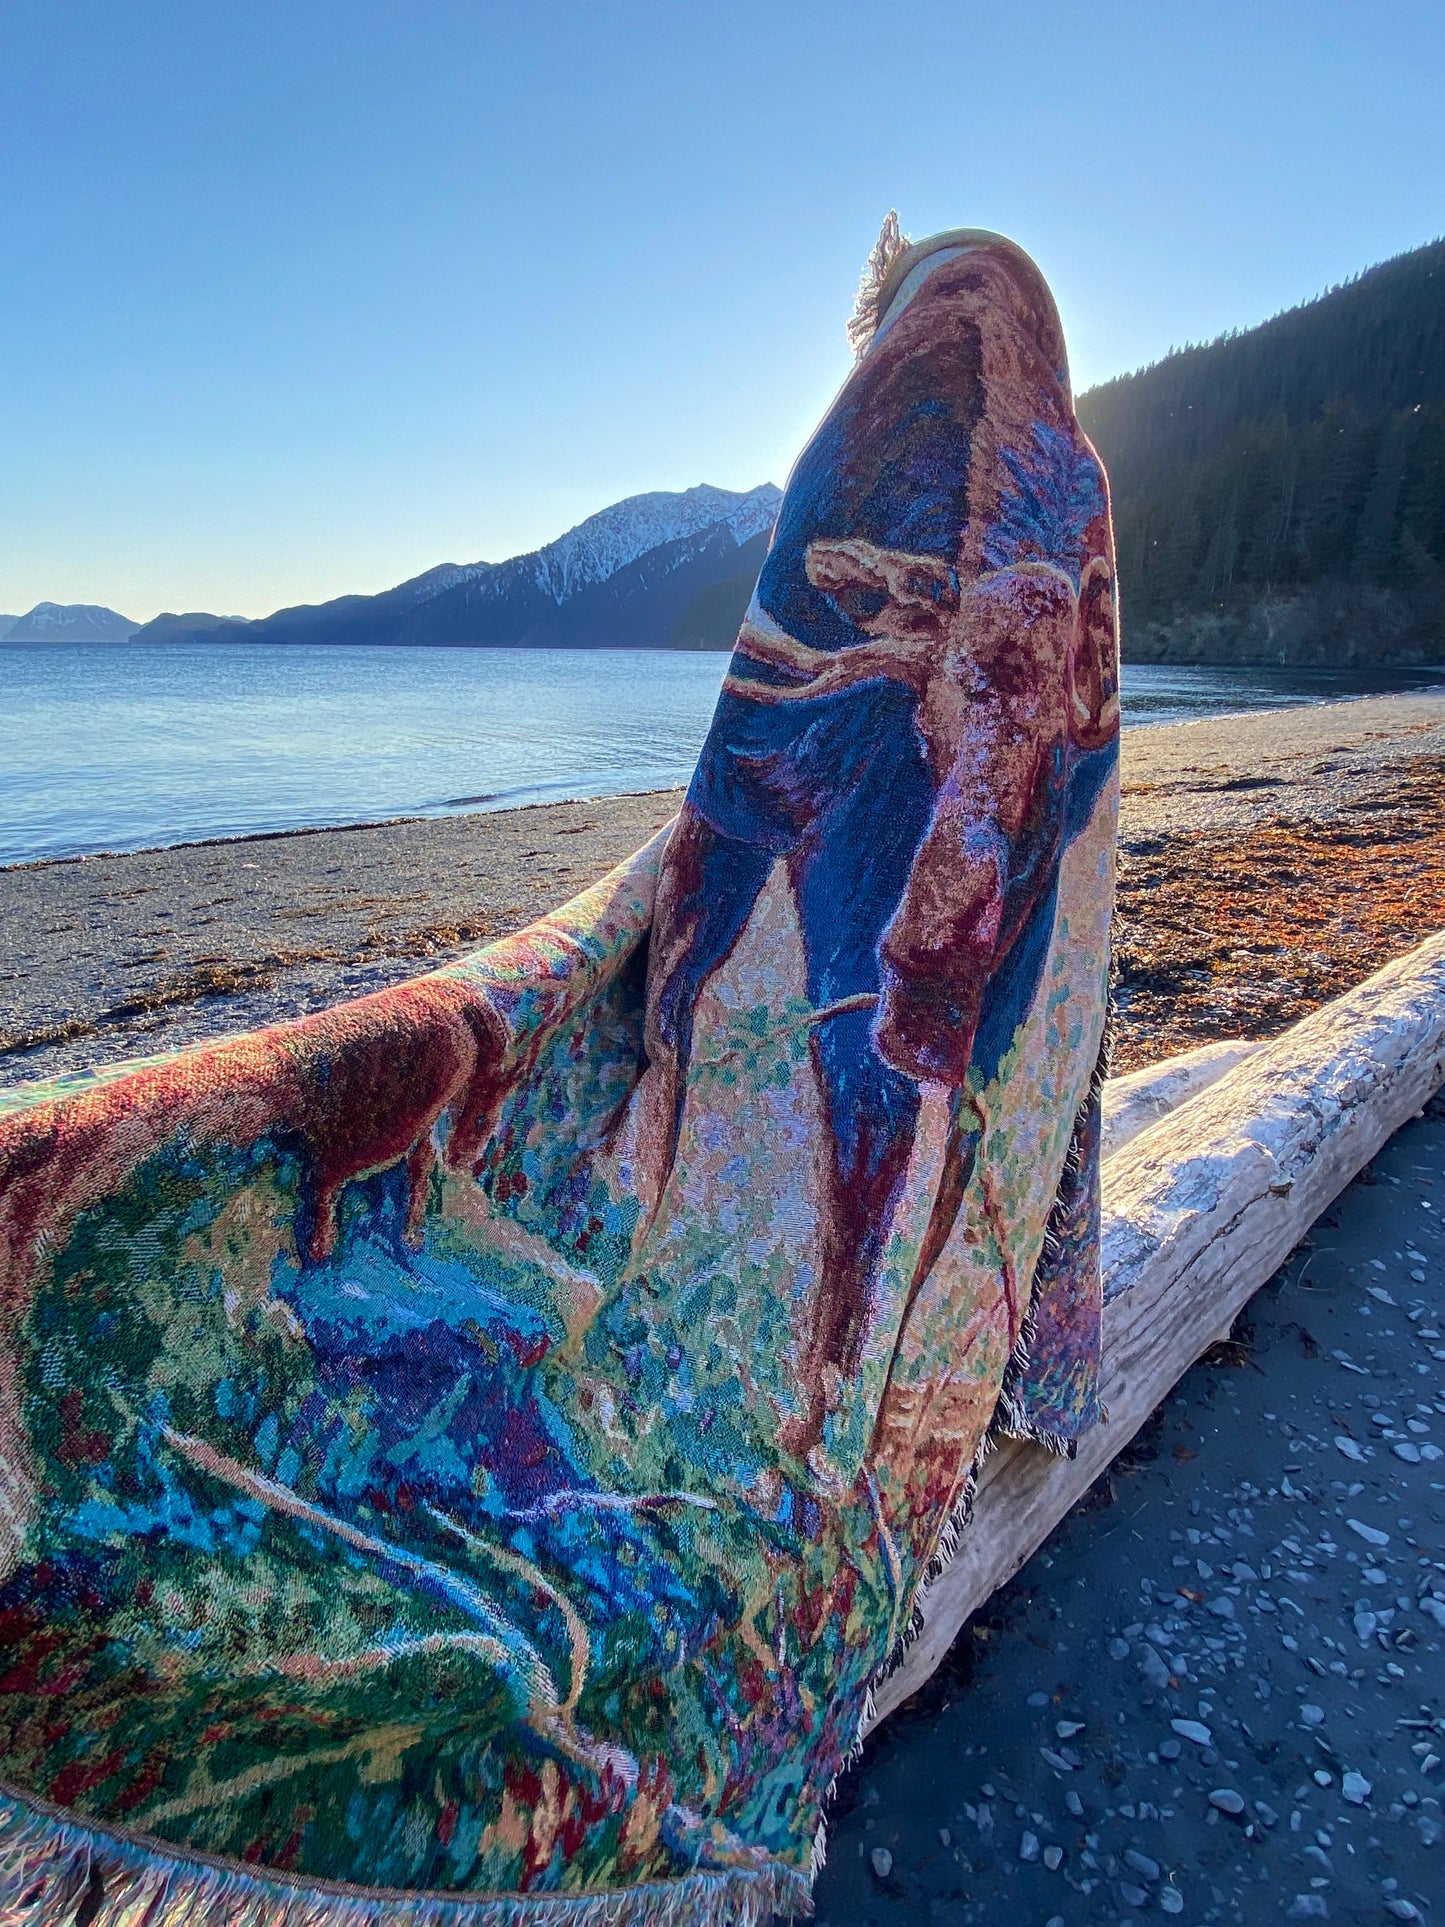 Woven Tapestry Blanket - Wall art Tapestry - Oil Finger Painting - Home Deco,Tapestry, blanket, Gift